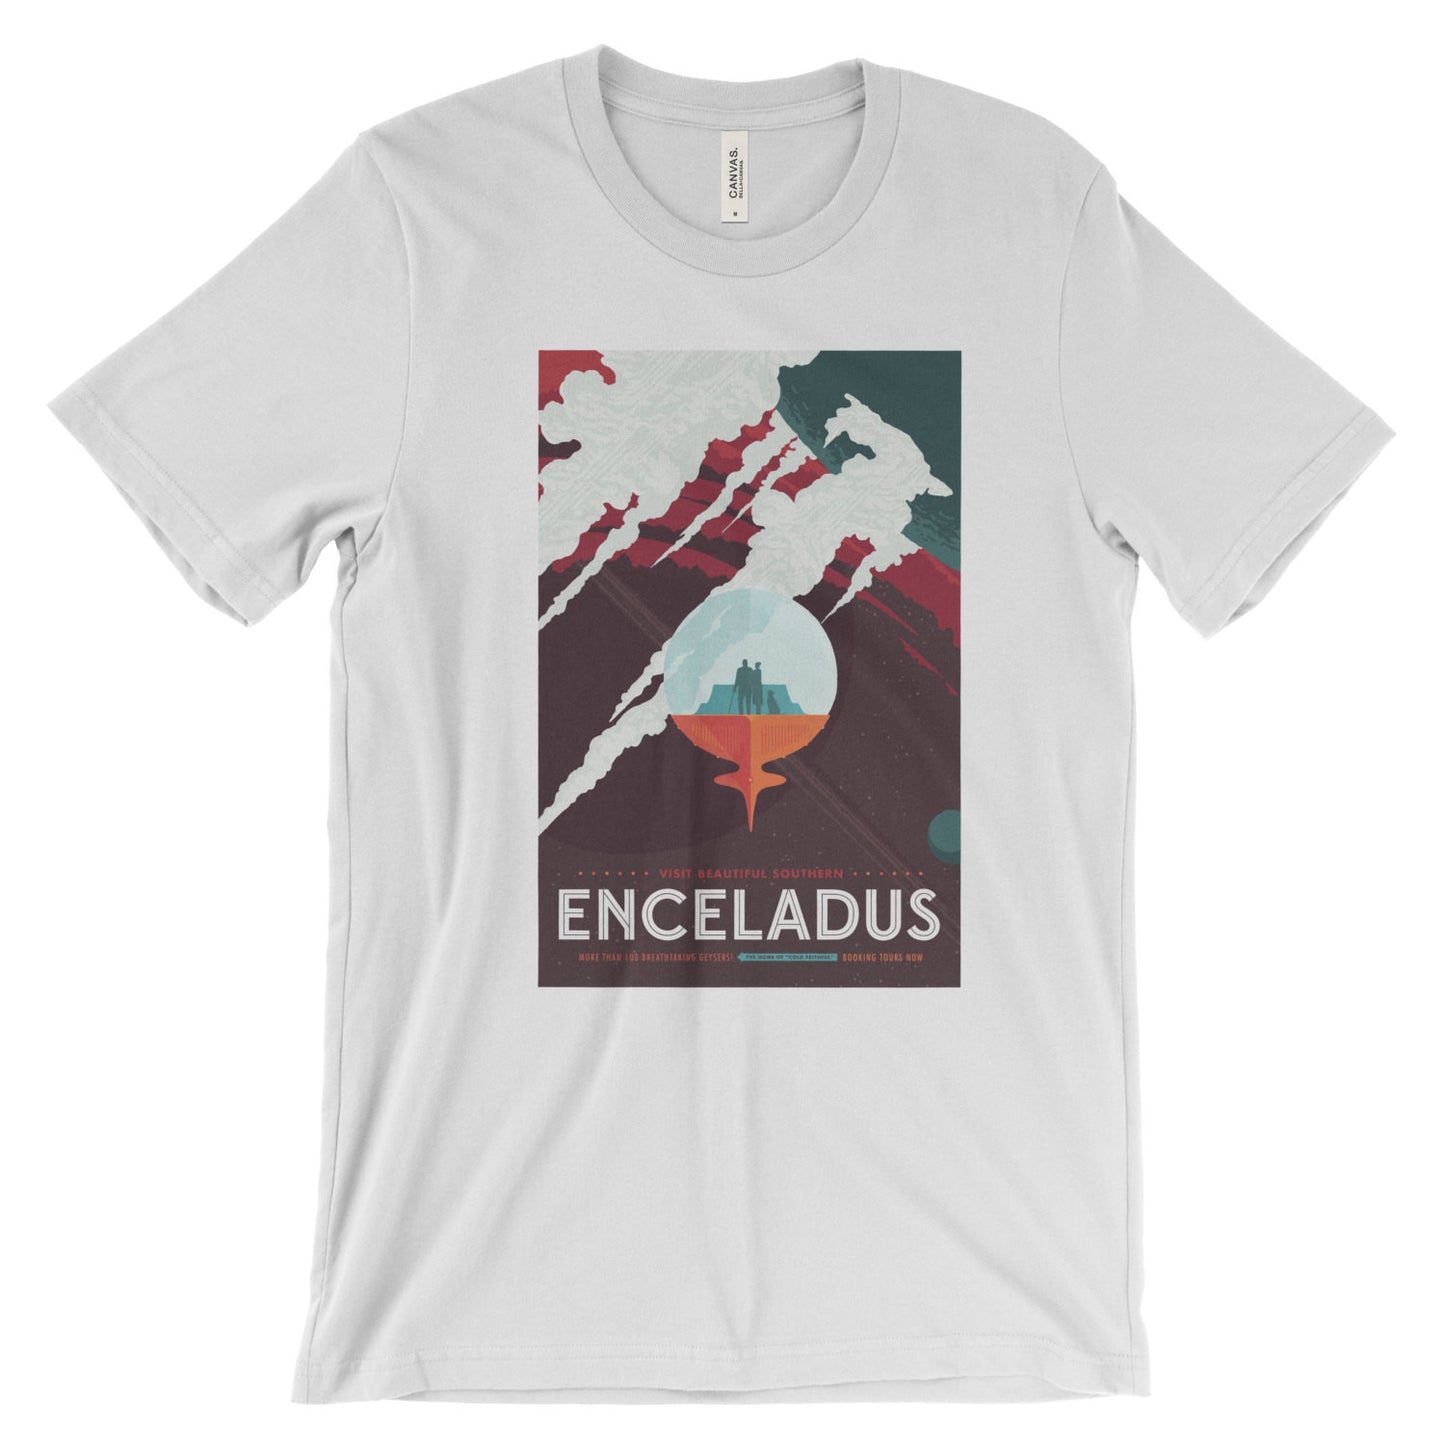 Enceladus Poster Print T-Shirt from NASA - Mighty Circus